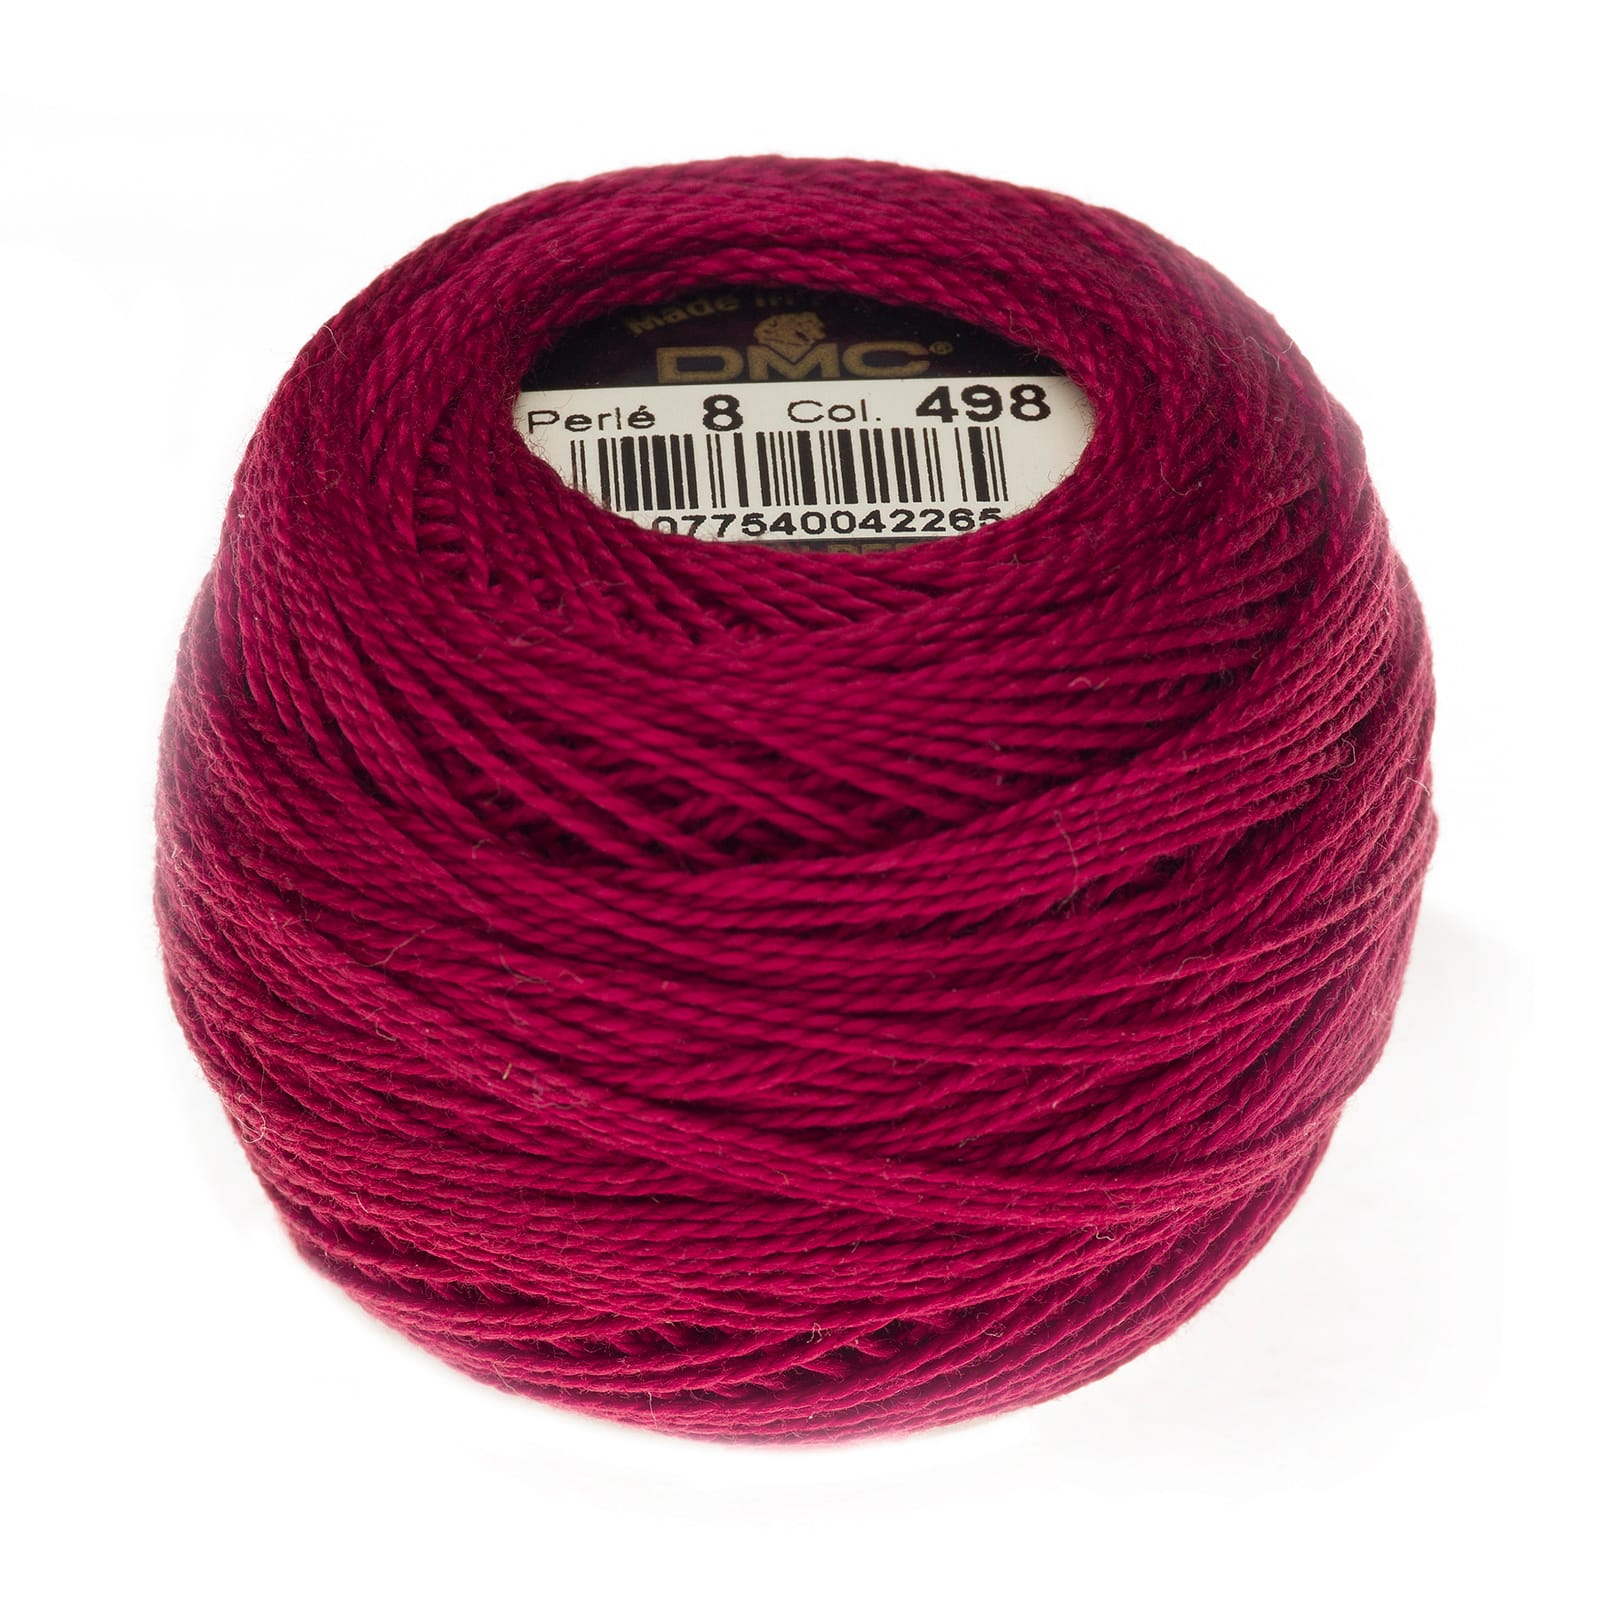 DMC Perle Cotton Thread Balls Size 8-Dark Lavender-#209